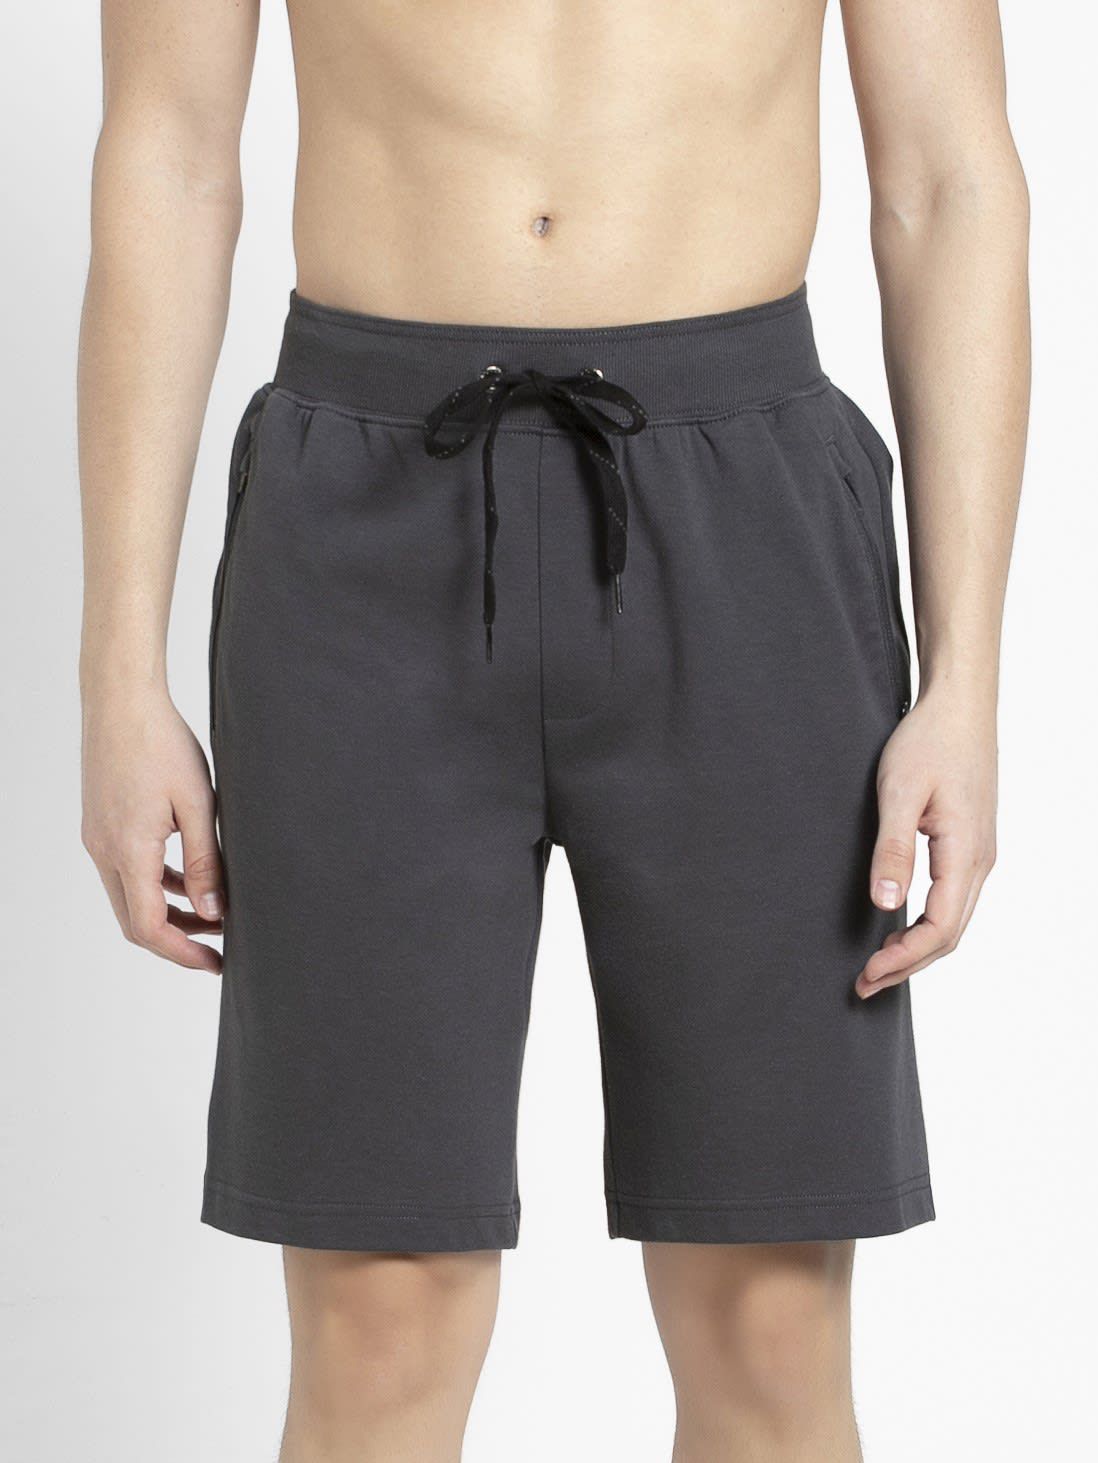     			Jockey AM14 Men's Super Combed Cotton Rich Shorts with Zipper Pockets - Graphite